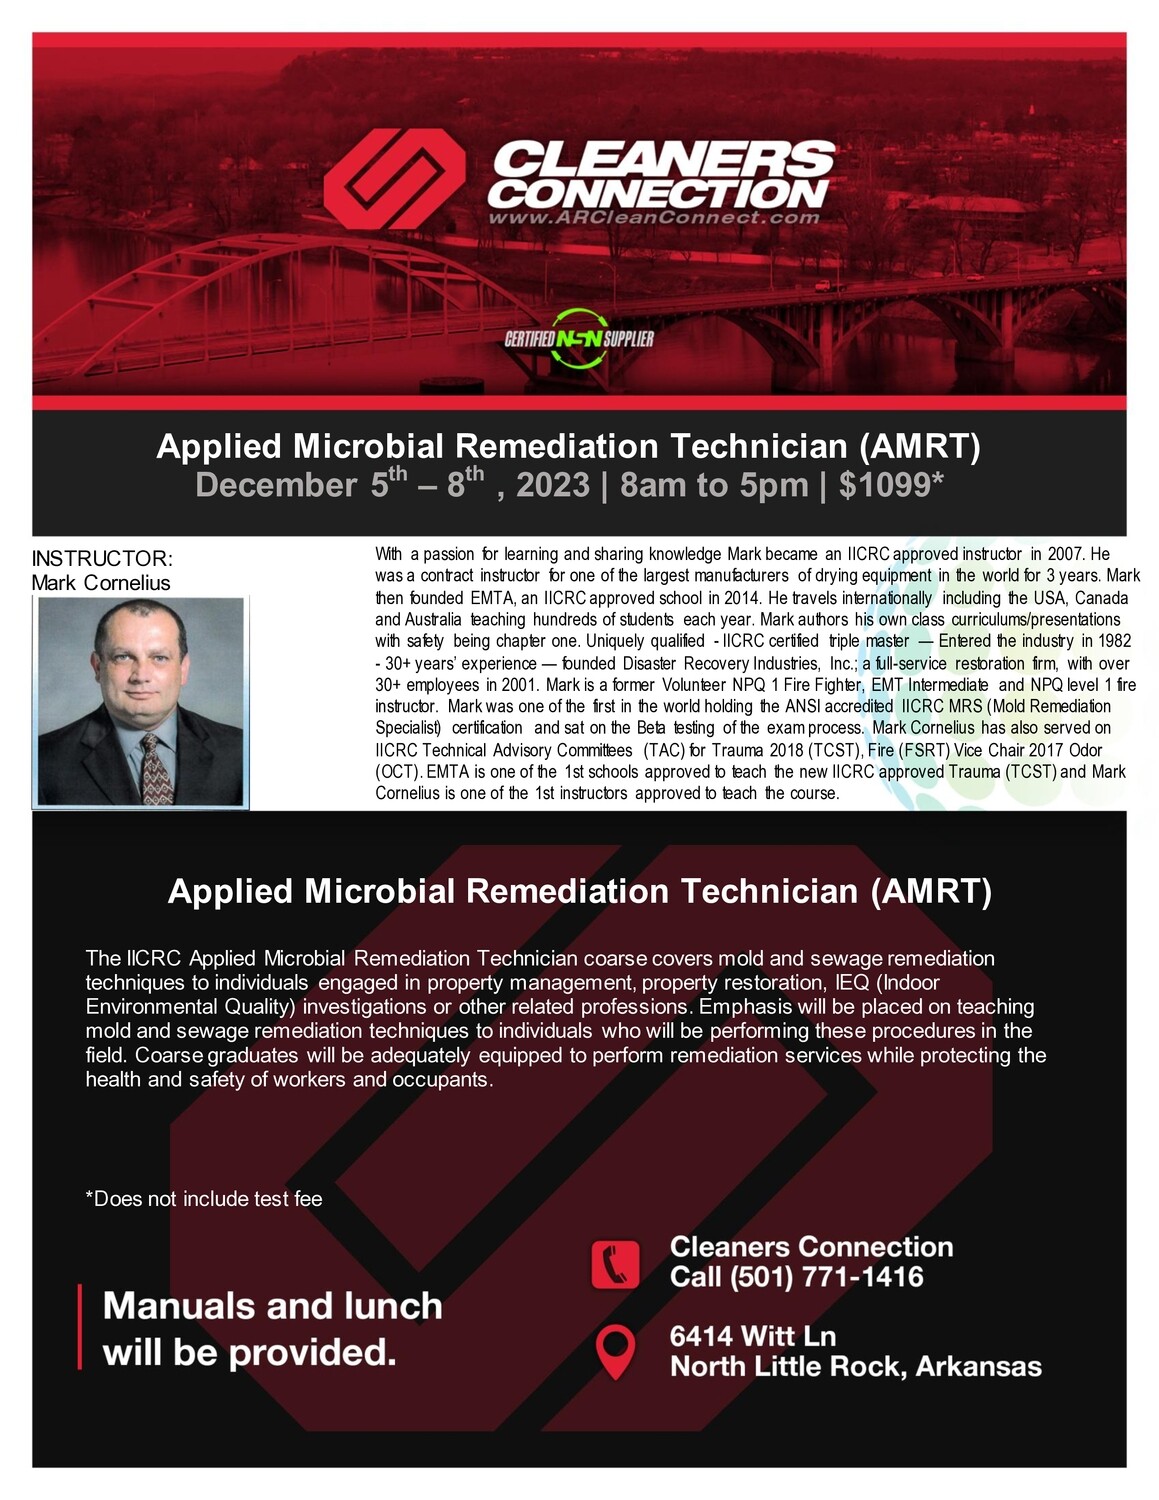 IICRC AMRT - Applied Microbial Remediation Technician Class